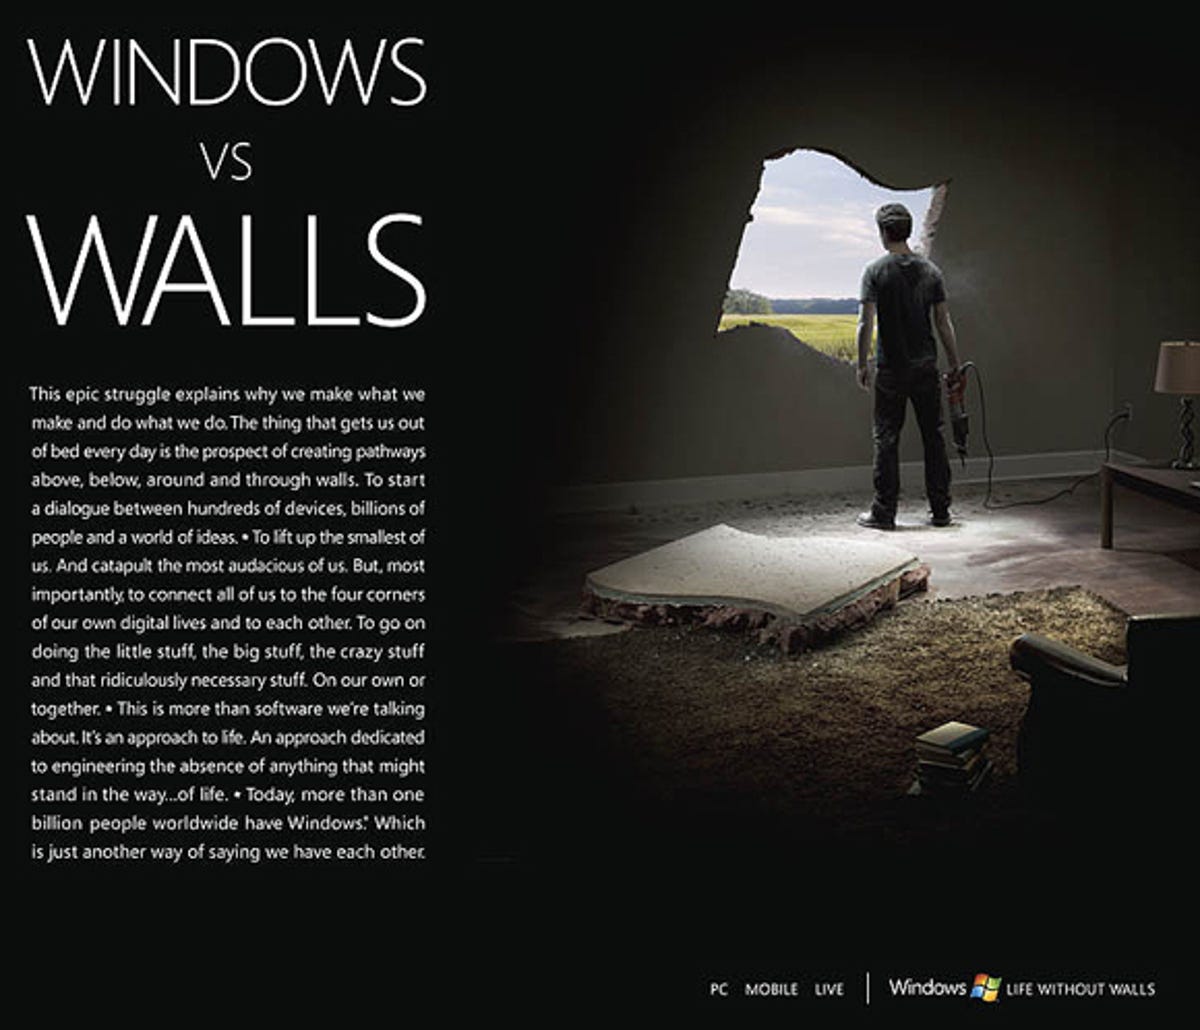 Microsoft "windows vs. walls" ad